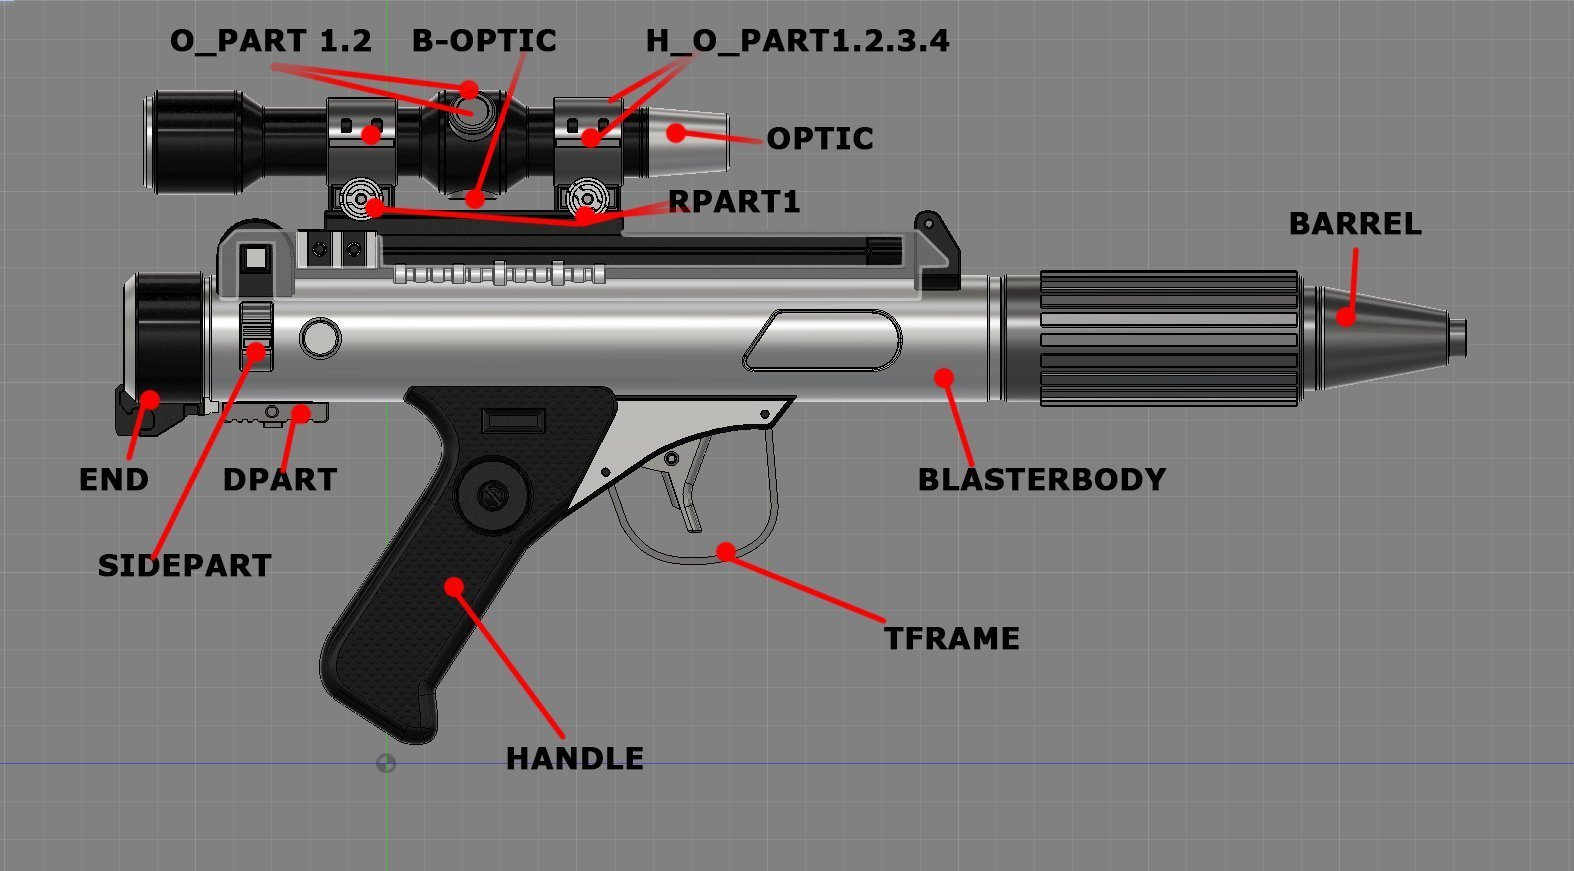 3D Printed DH-17 blaster pistol by Sergey Kolesnik